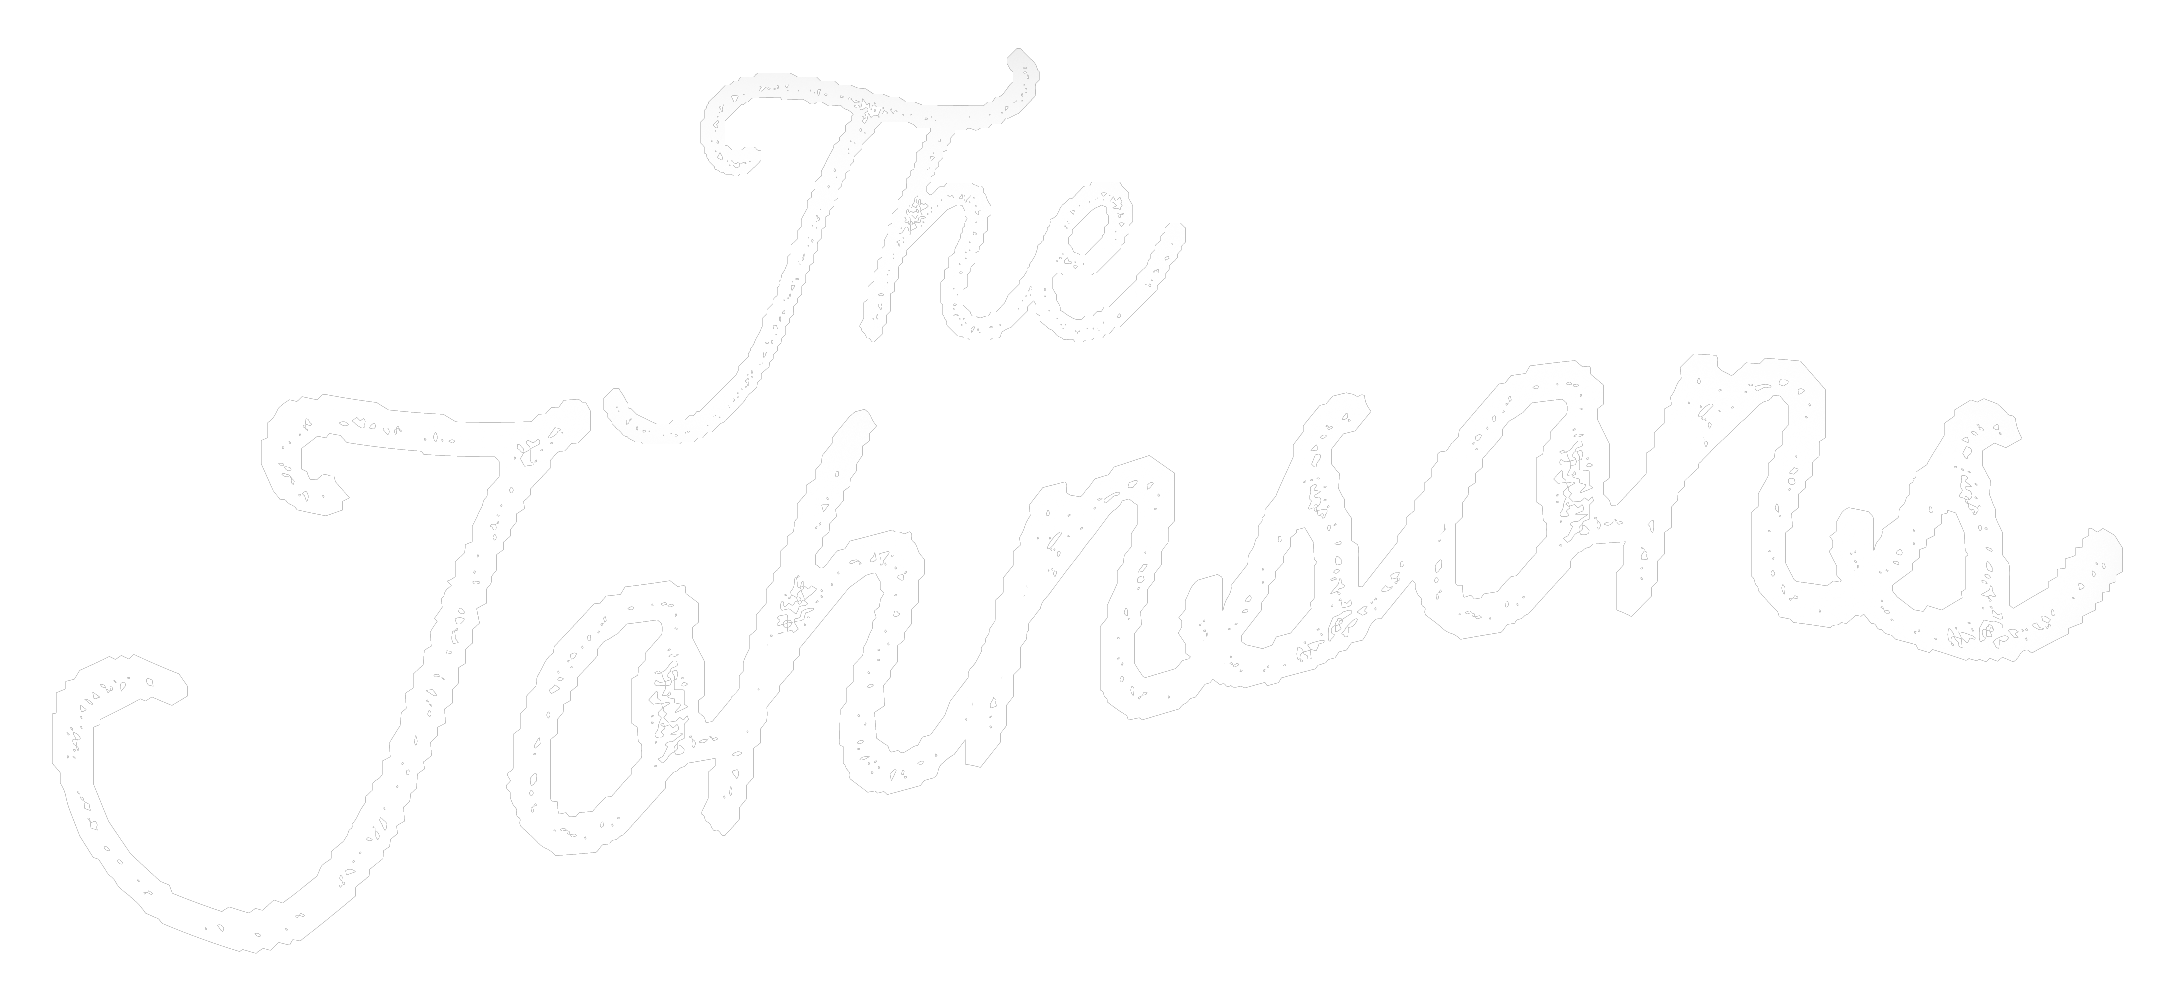 THE JOHNSONS